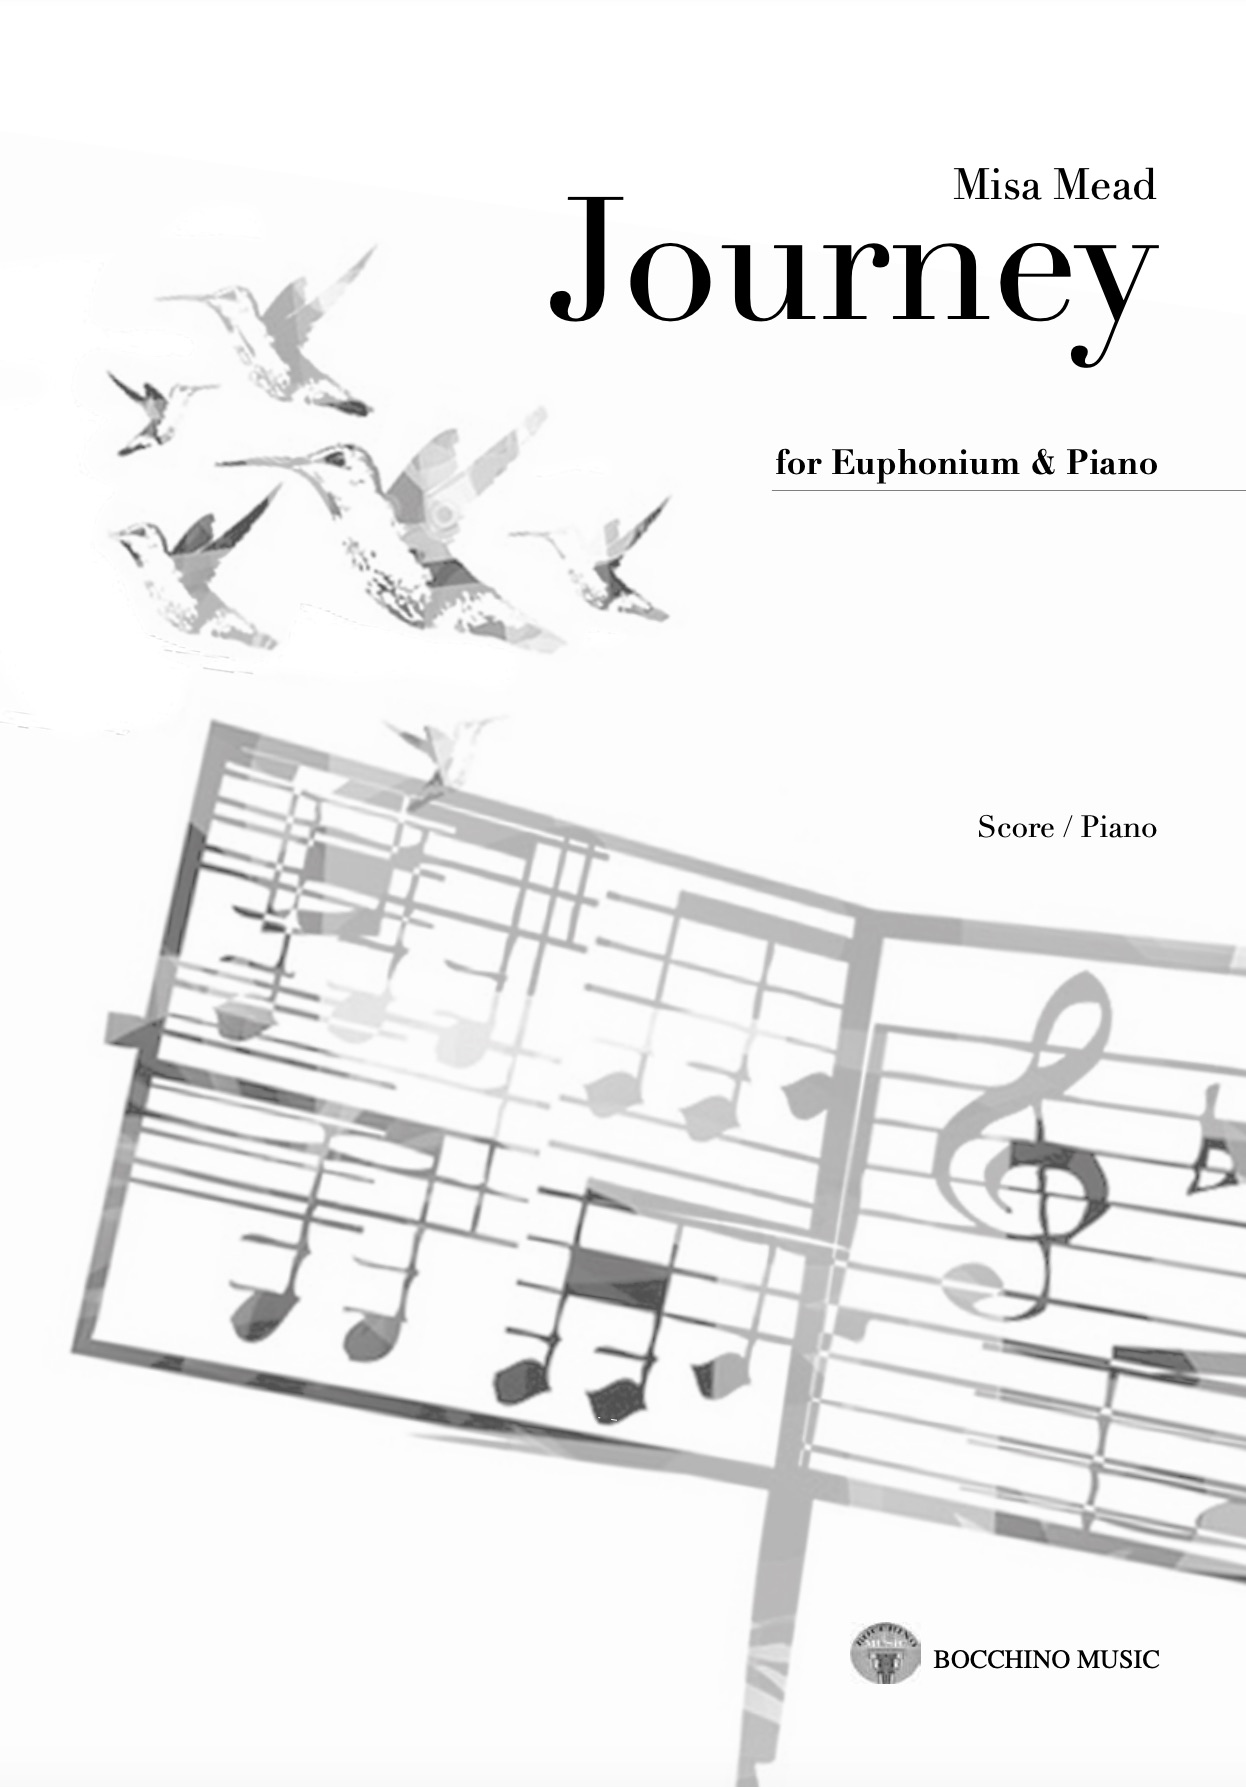 Journey - Misa Mead - Euphonium and Piano